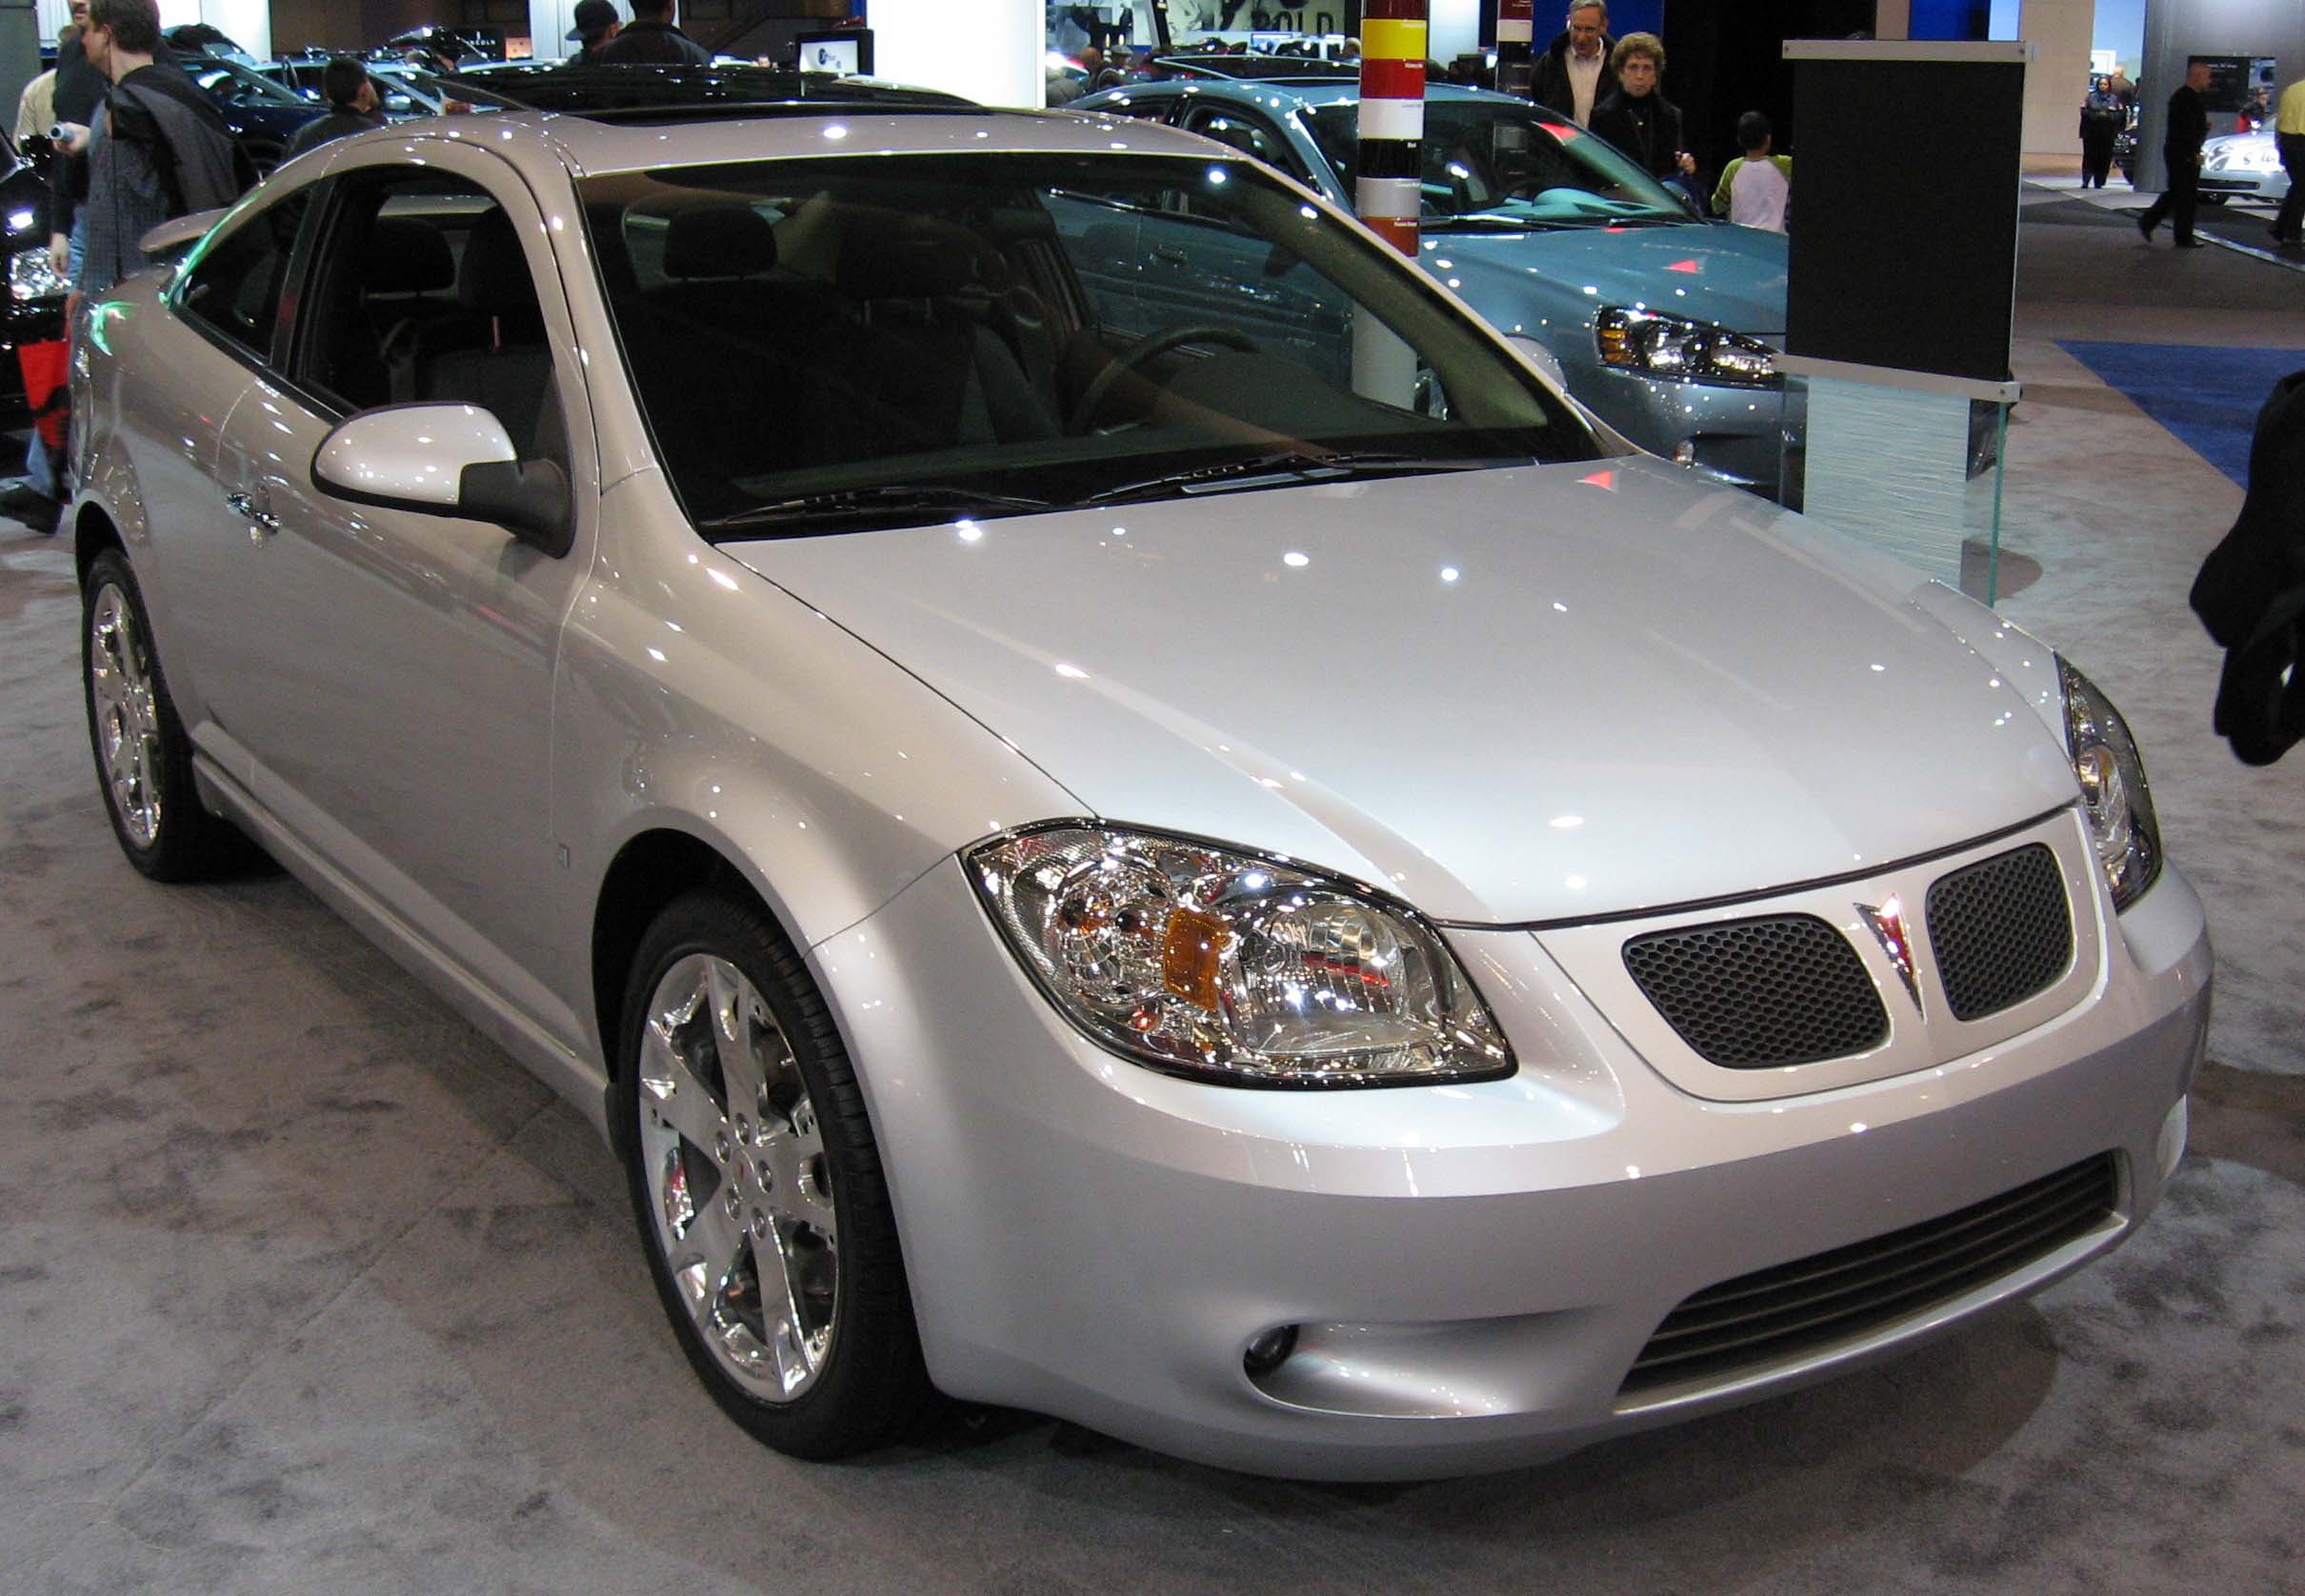 File:2007-Pontiac-G5-coupe-DC.jpg - Wikimedia Commons